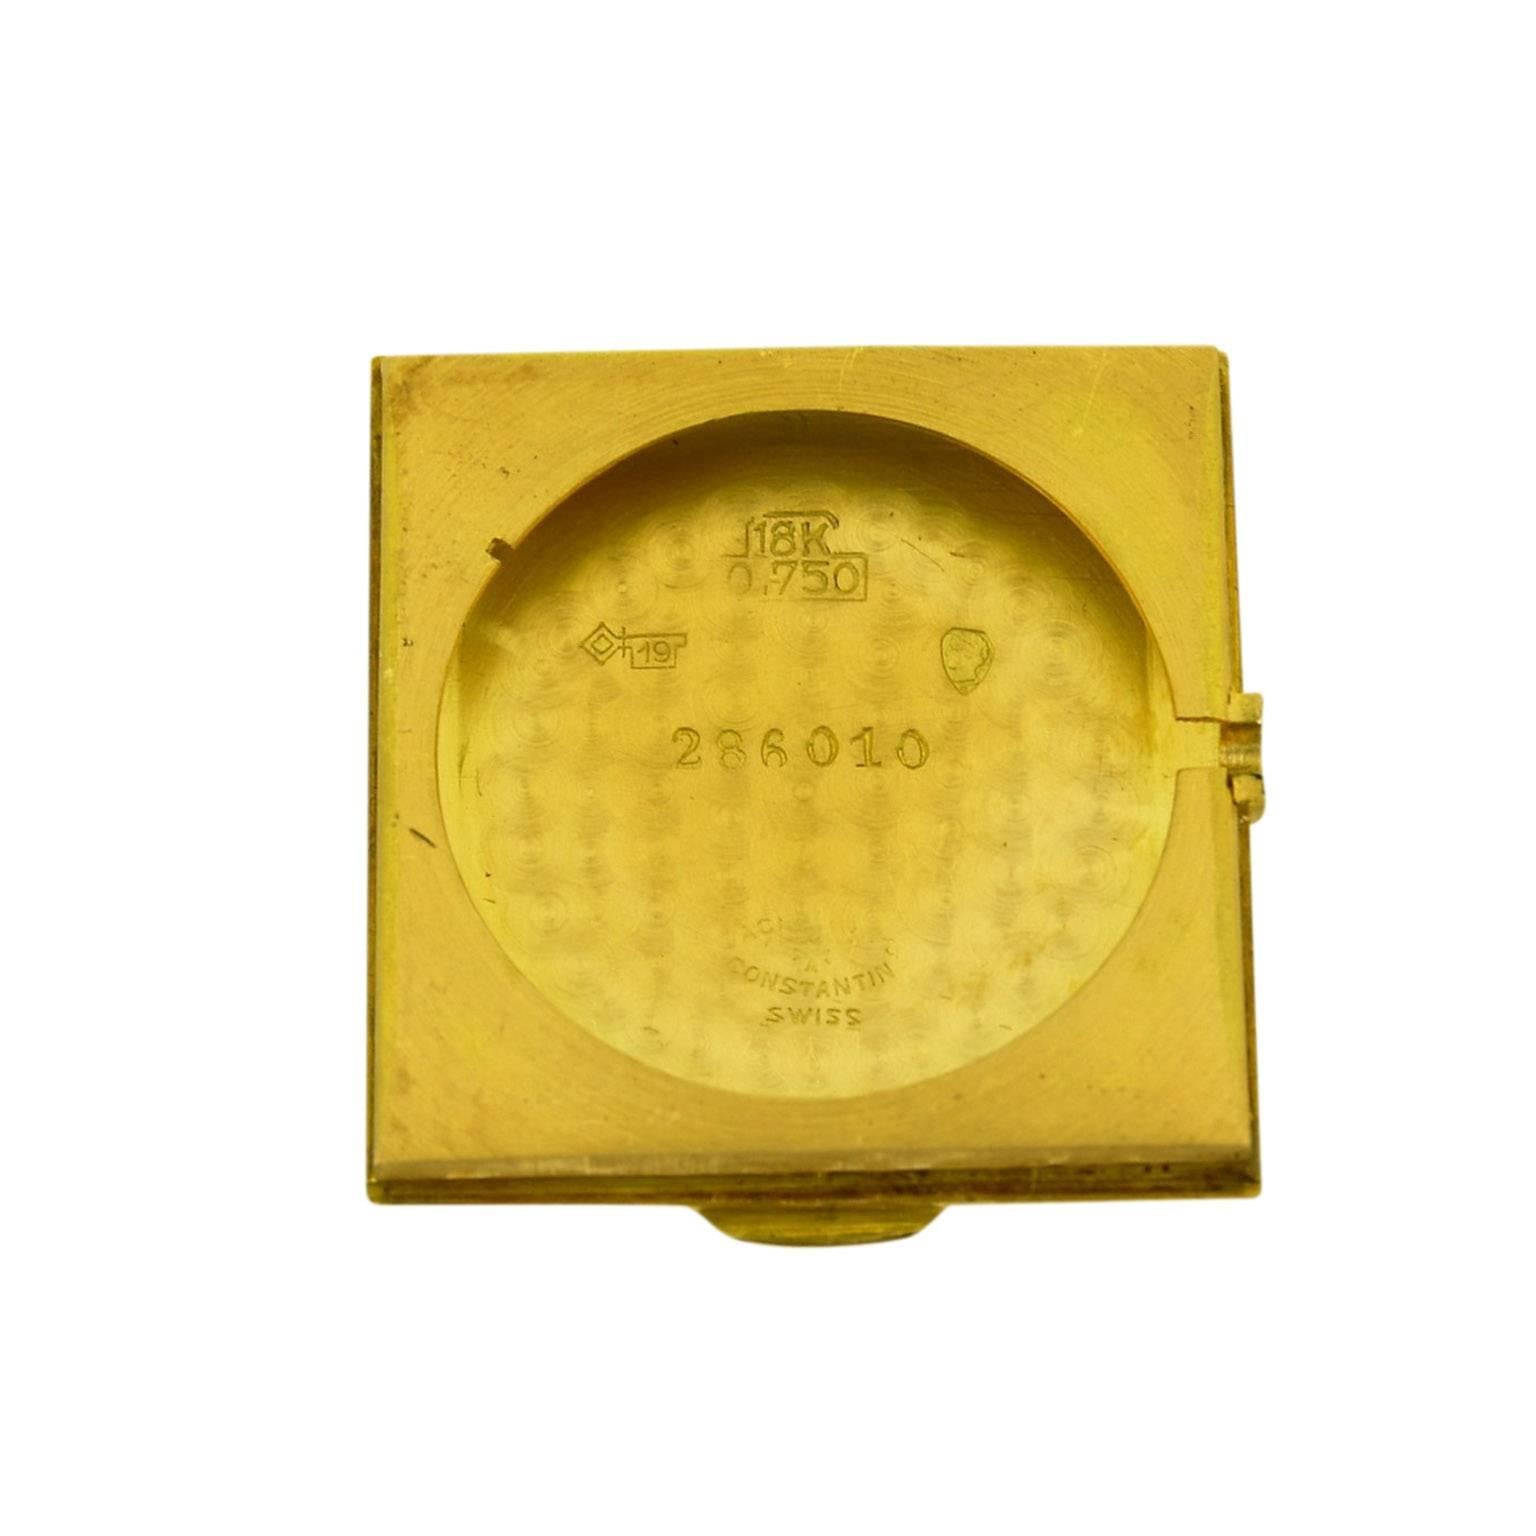 Vacheron Constantin Yellow Gold Sterling Silver Dial Art Deco Manual Watch  2